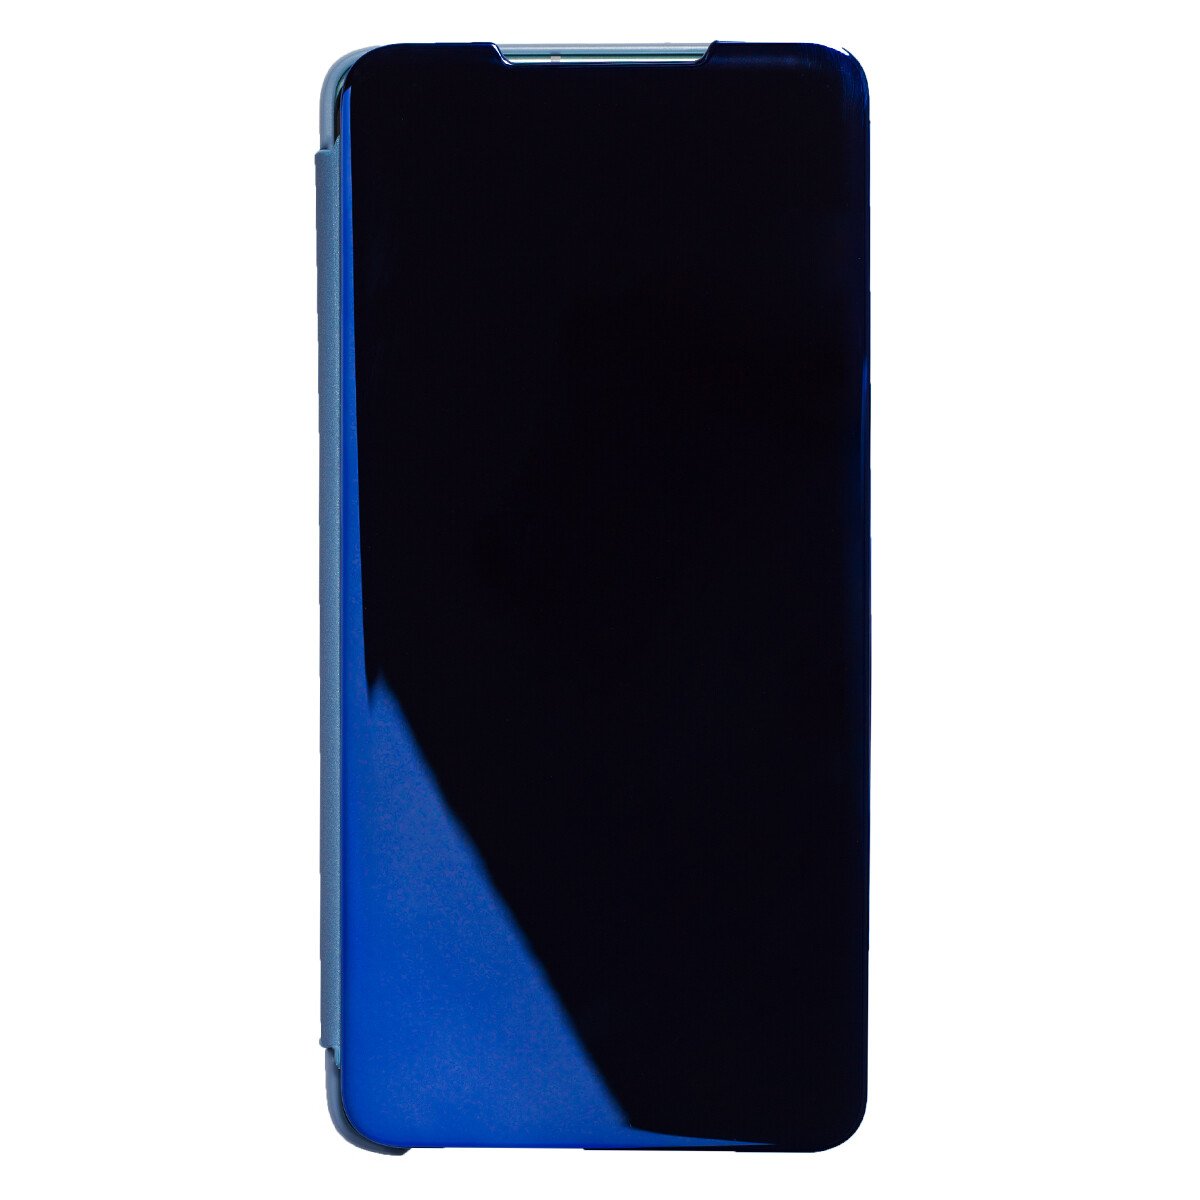 Husa Flip Mirror Samsung Galaxy S10, Albastru thumb